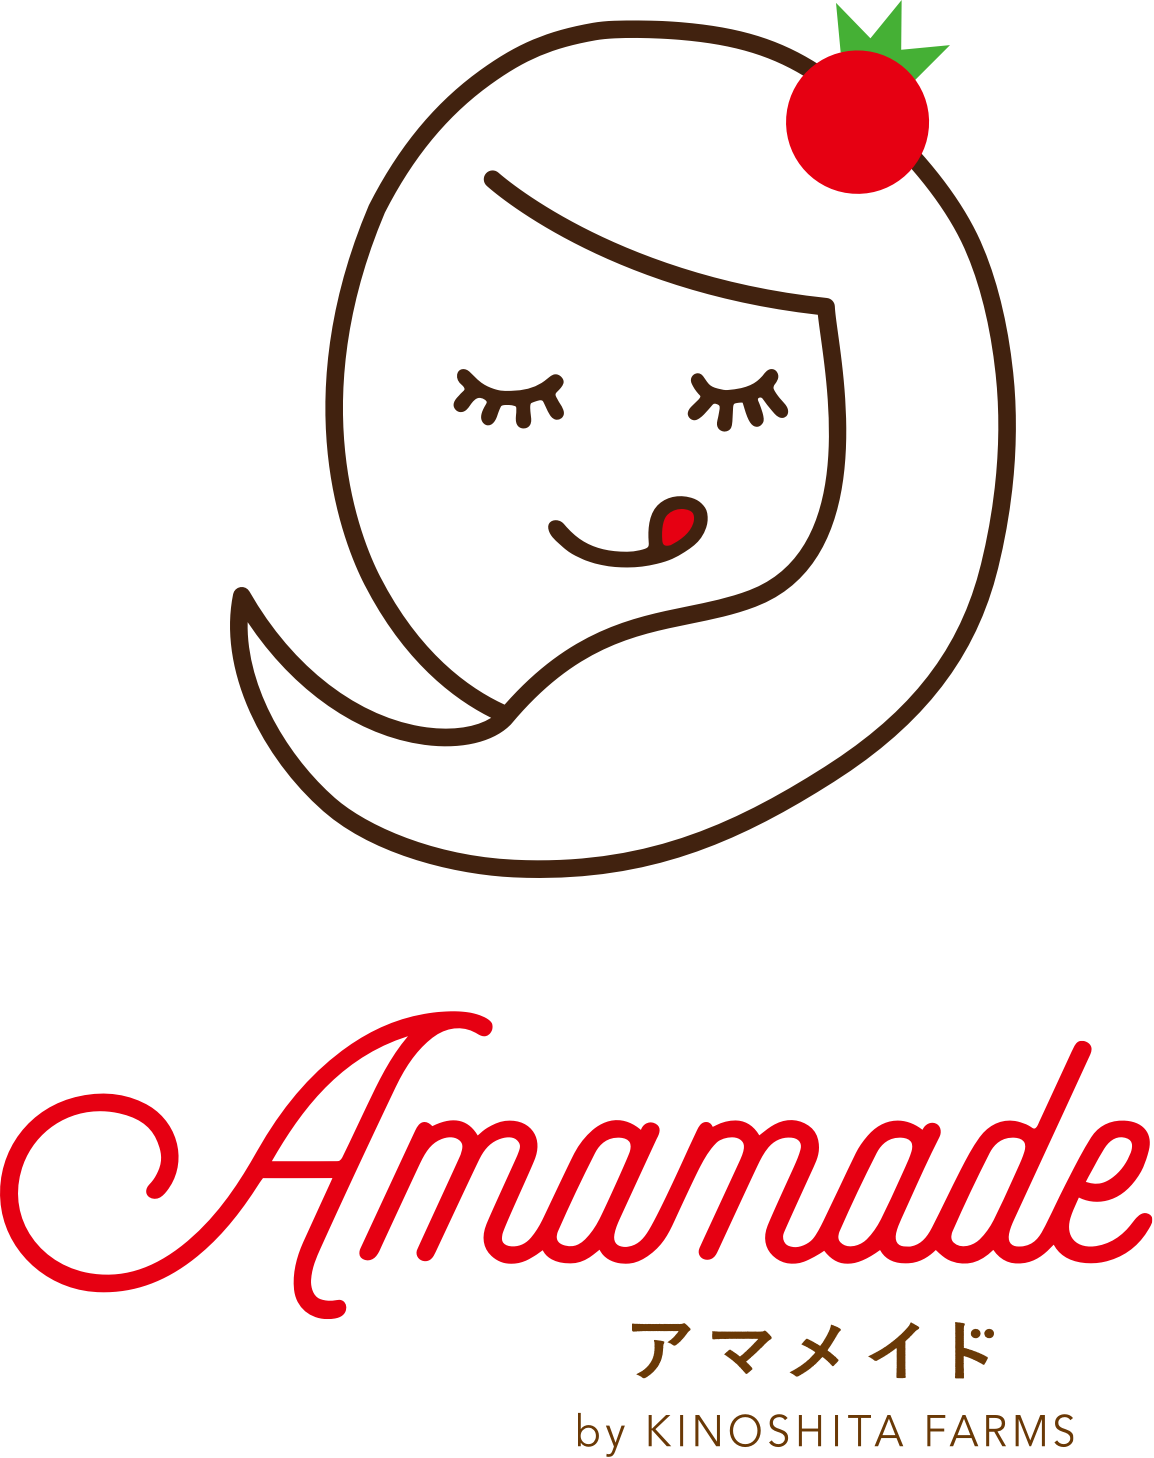 Amamade アマメイド by KINOSHITA FARMS